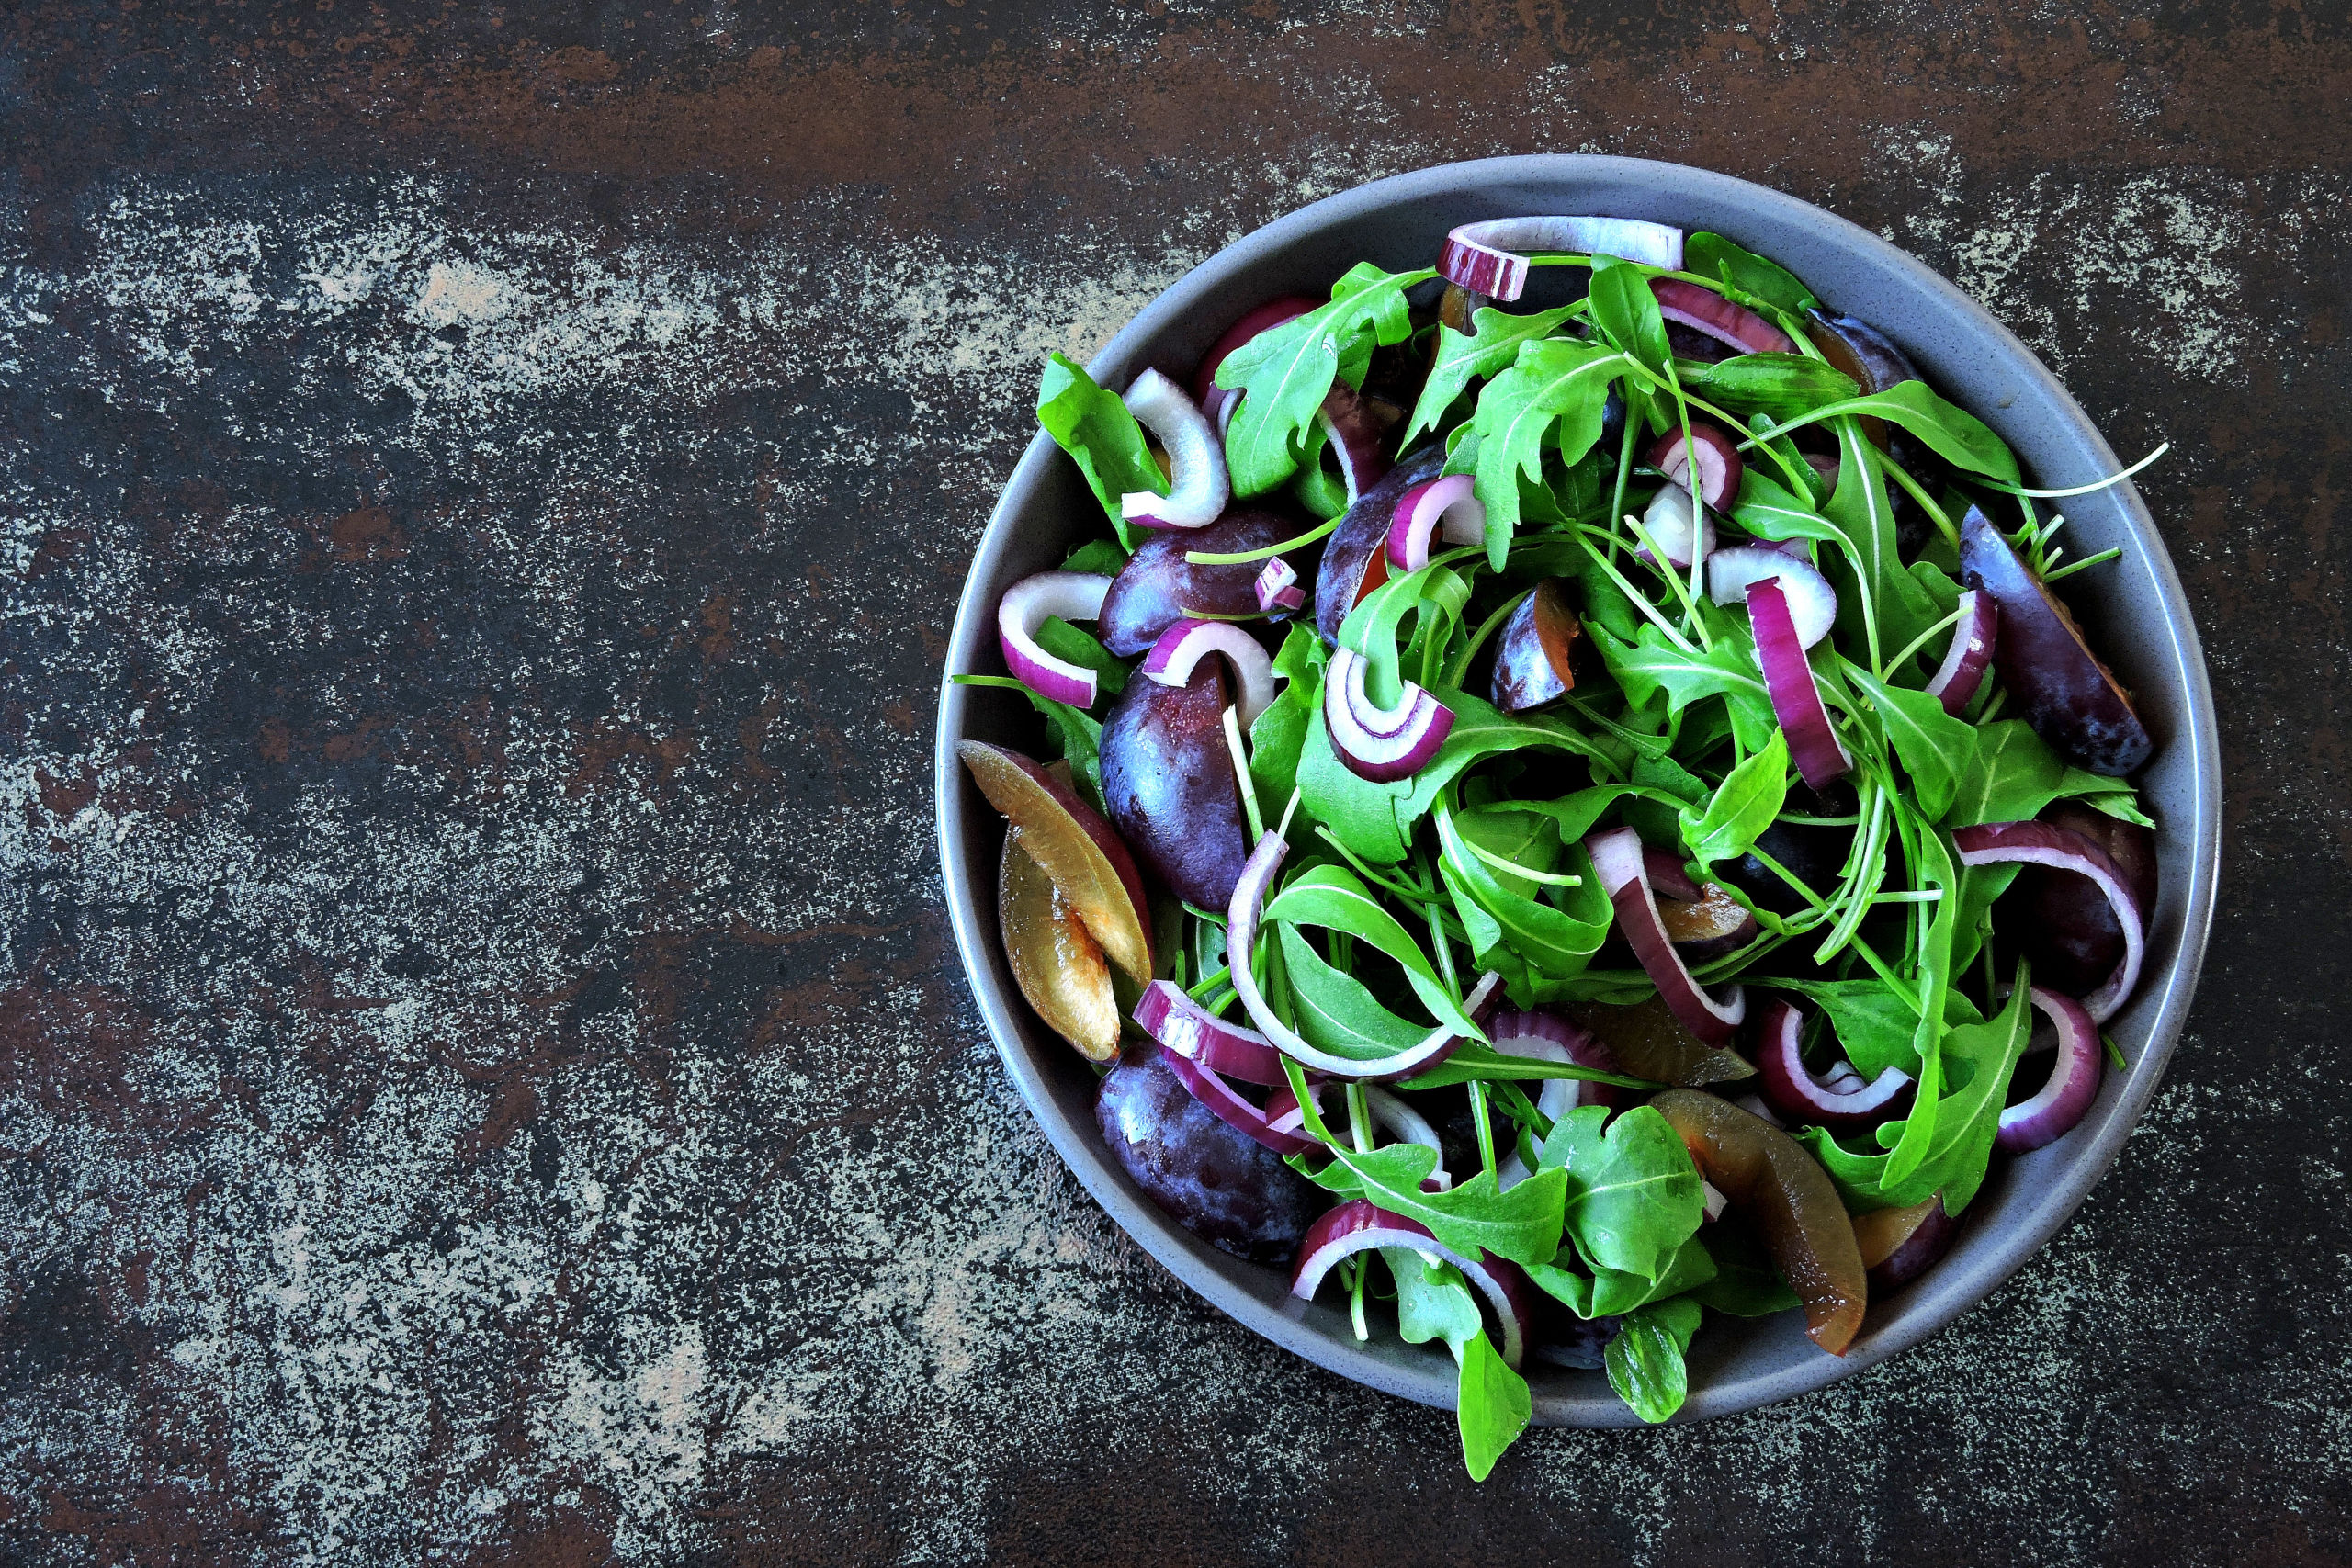 Stone Fruit Arugula Salad with Herbs & Asparagus